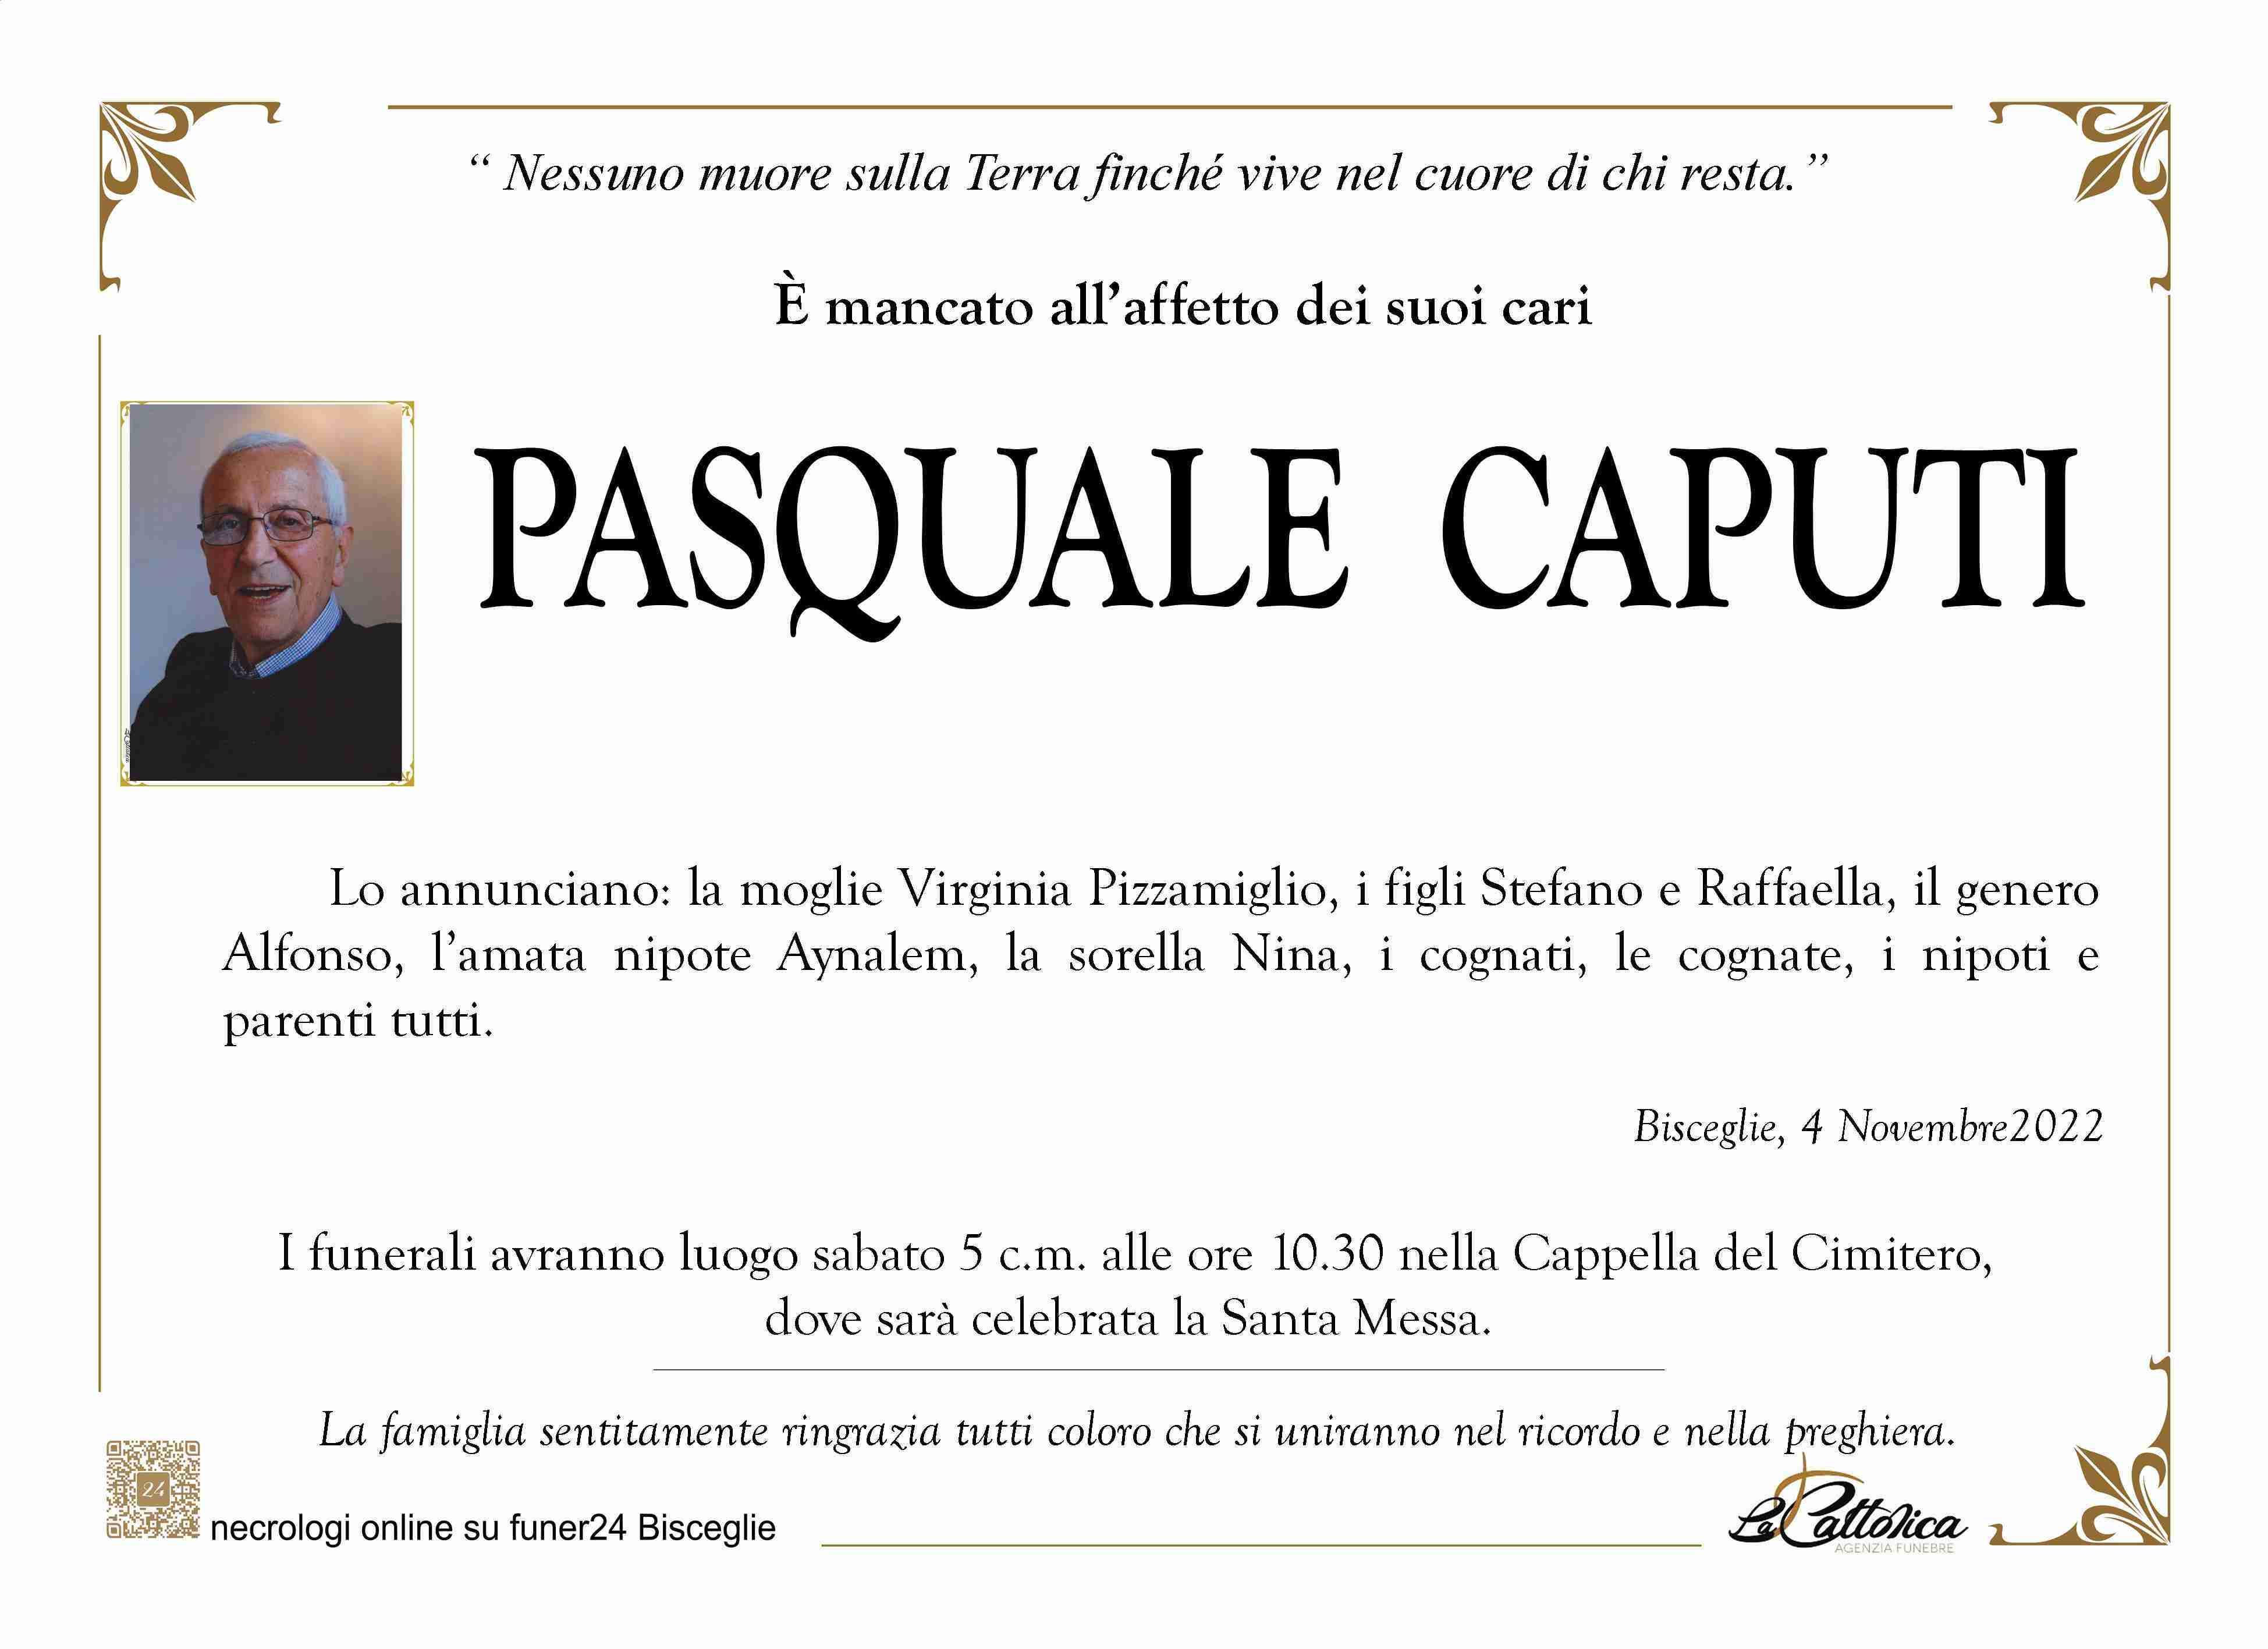 Pasquale Caputi